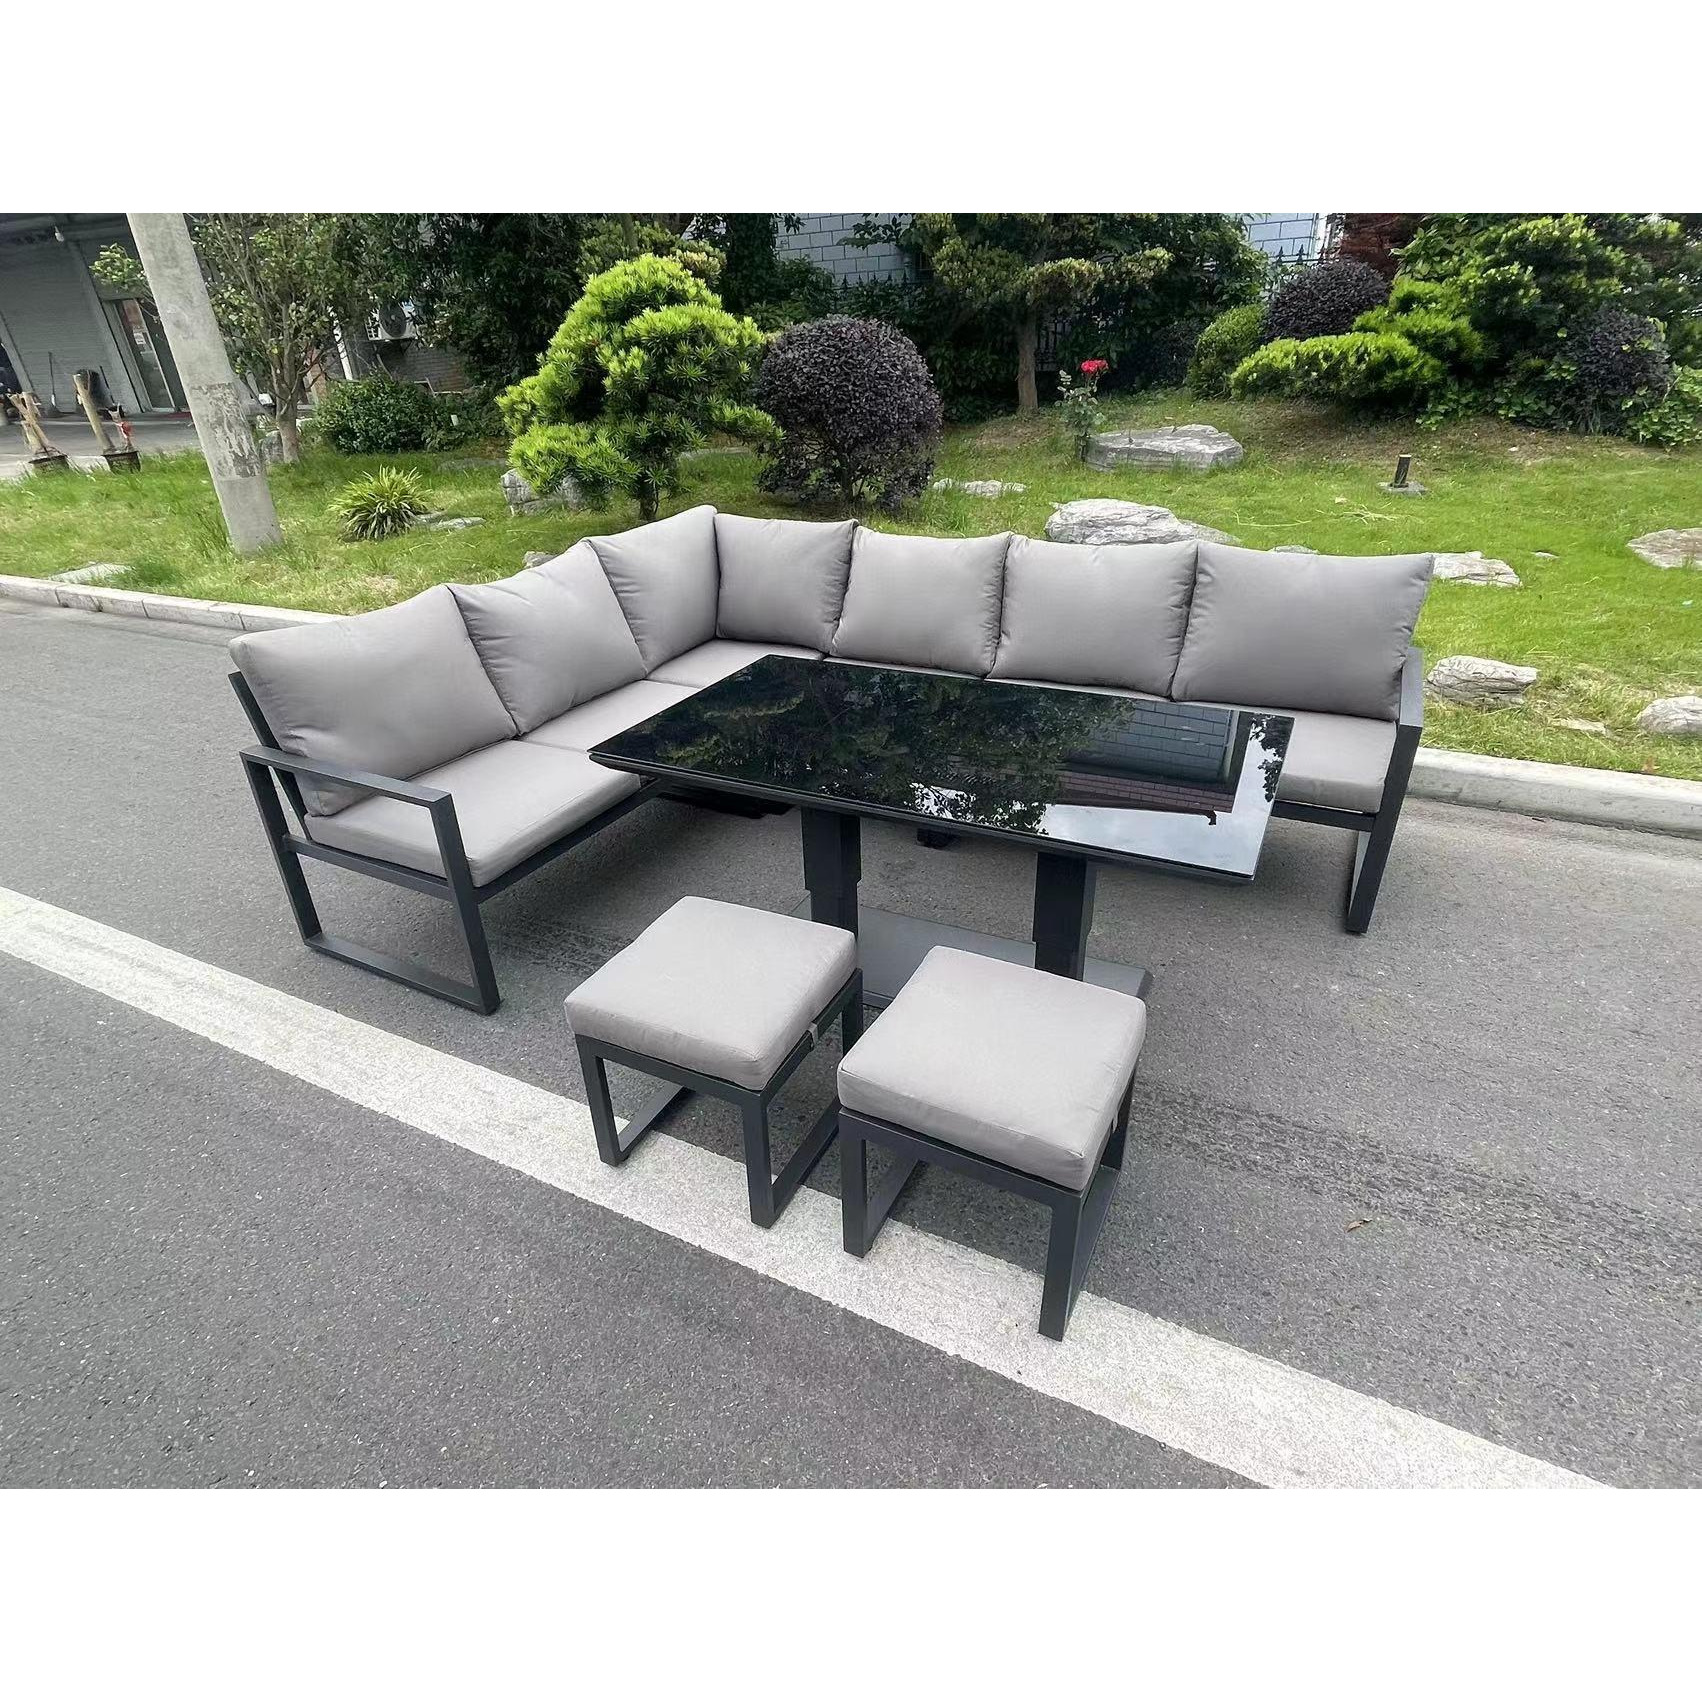 Aluminum Outdoor Garden Furniture Corner Sofa Adjustable Rising Lifting Table Sets Dark Grey Black Tempered Glass 8 Seater - image 1